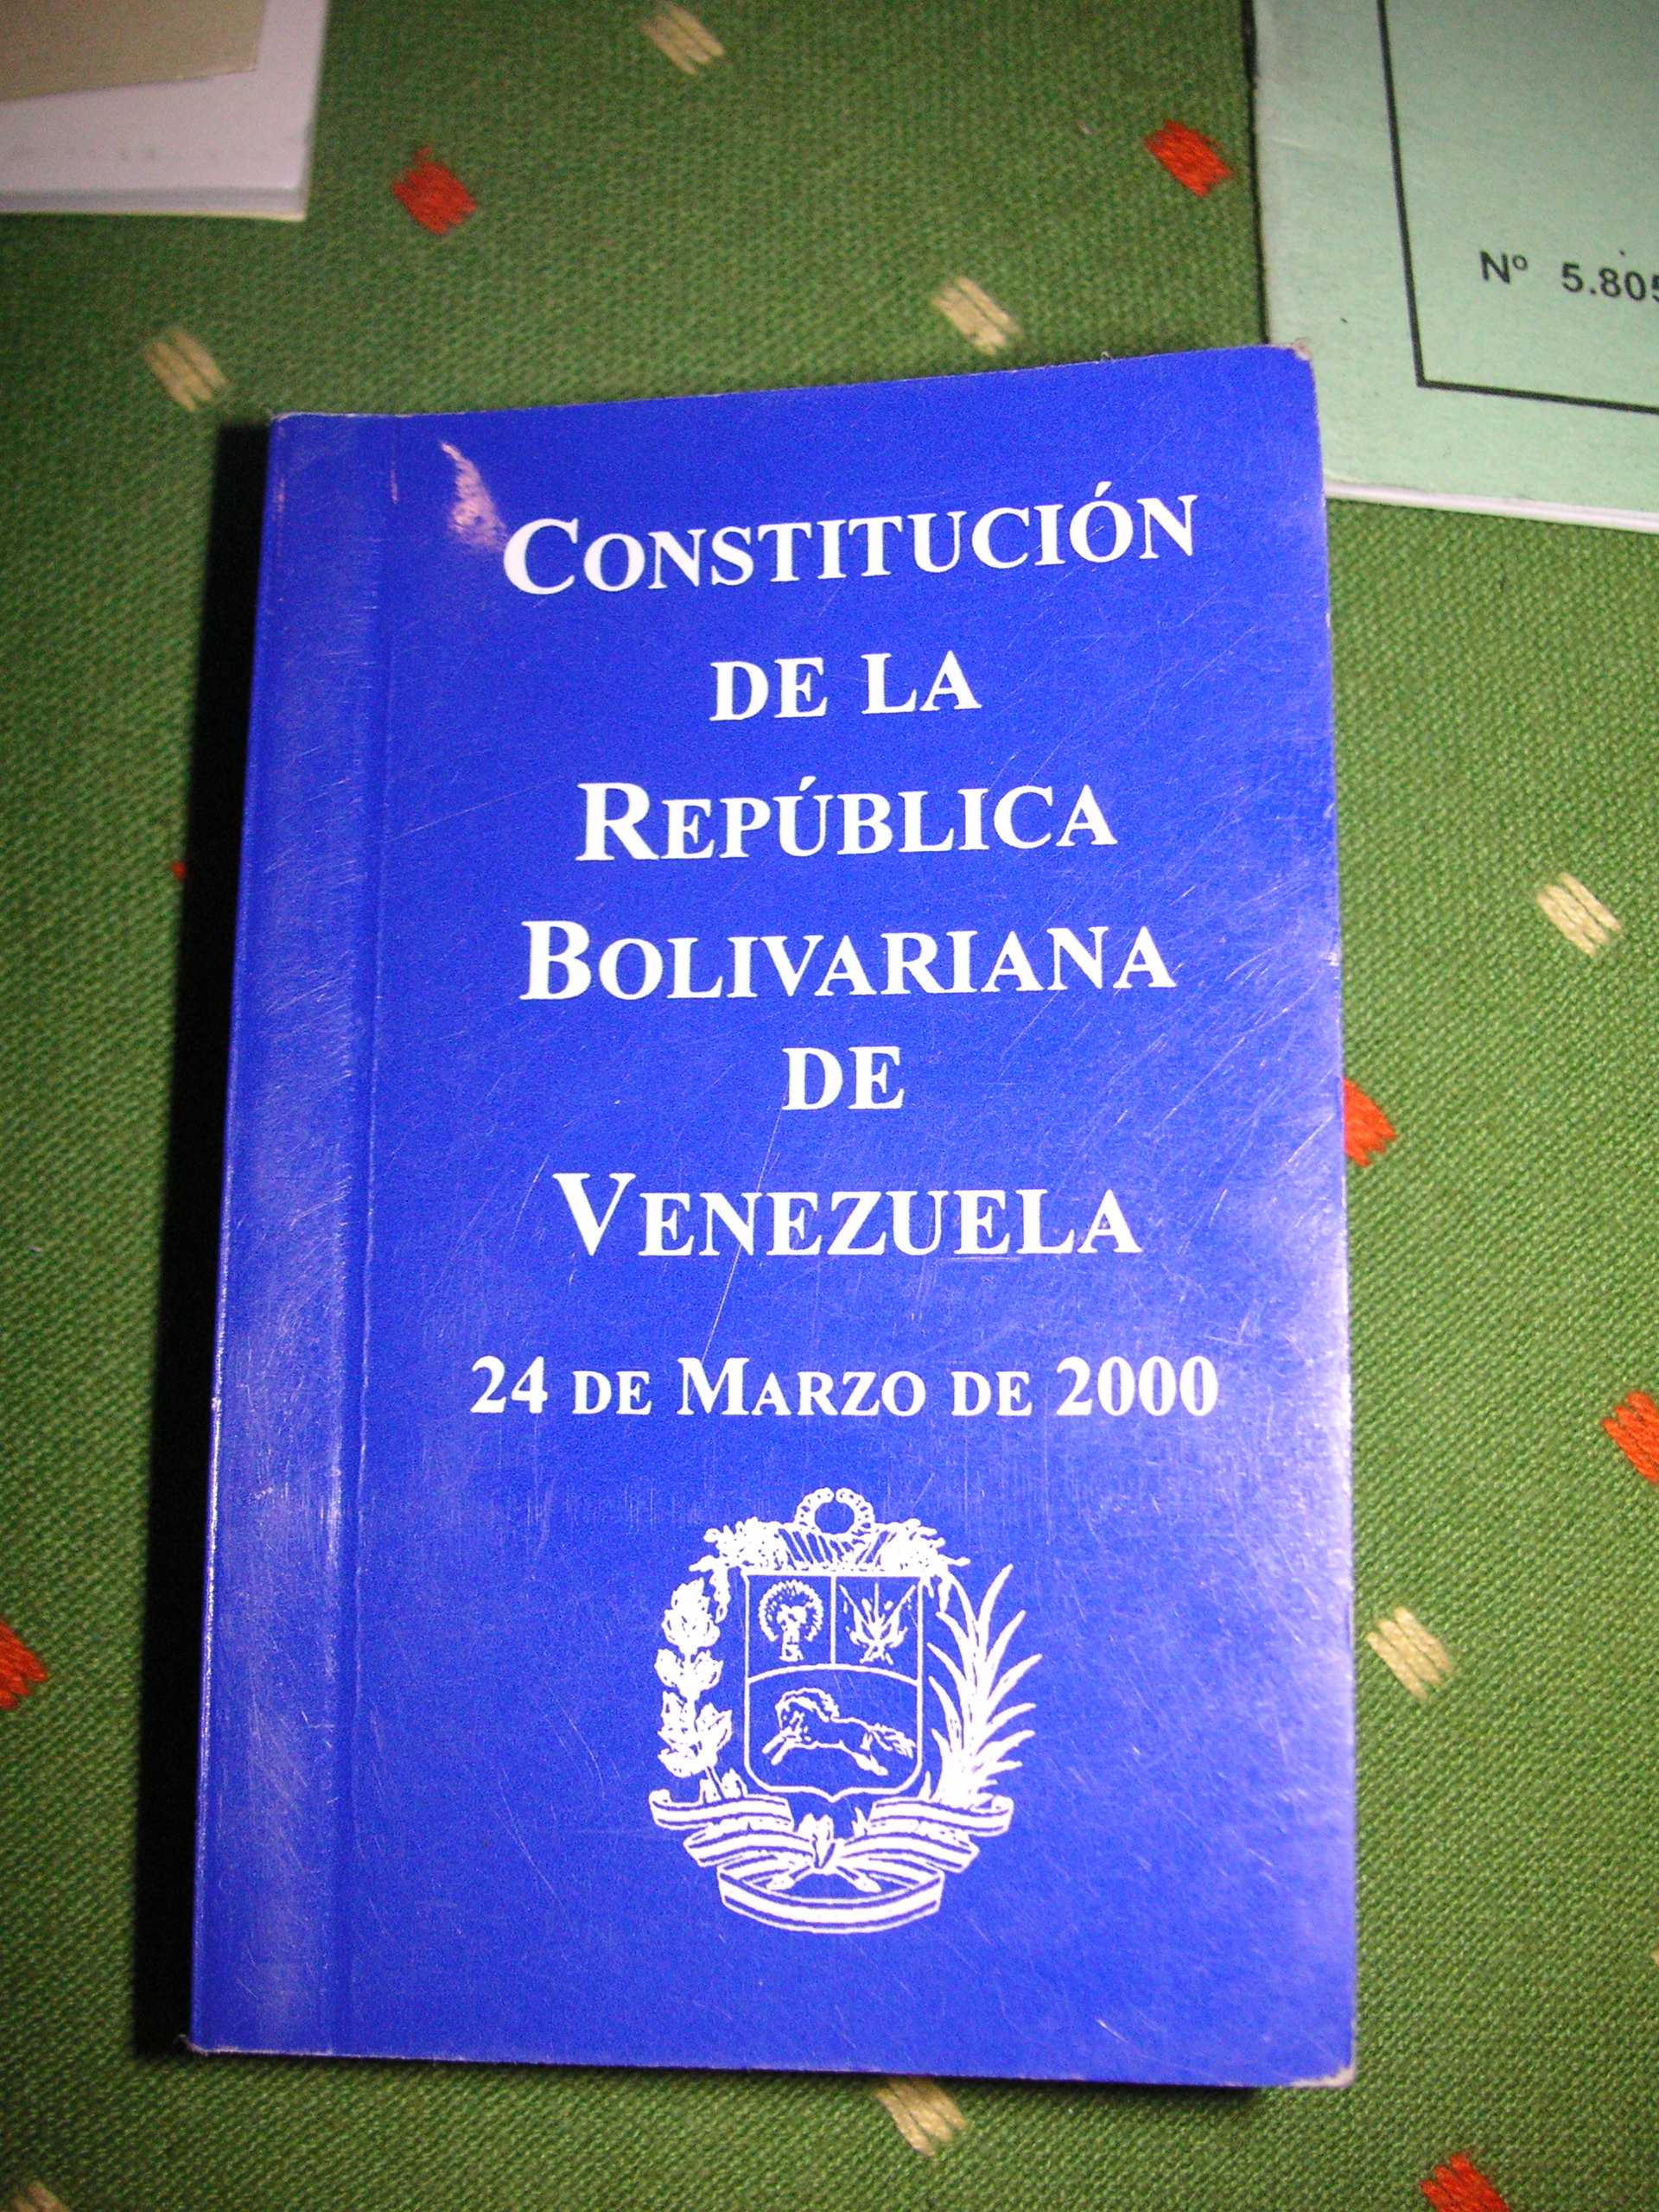 Constitution of Venezuela (photo credit: Beatrice Murch/Flickr)